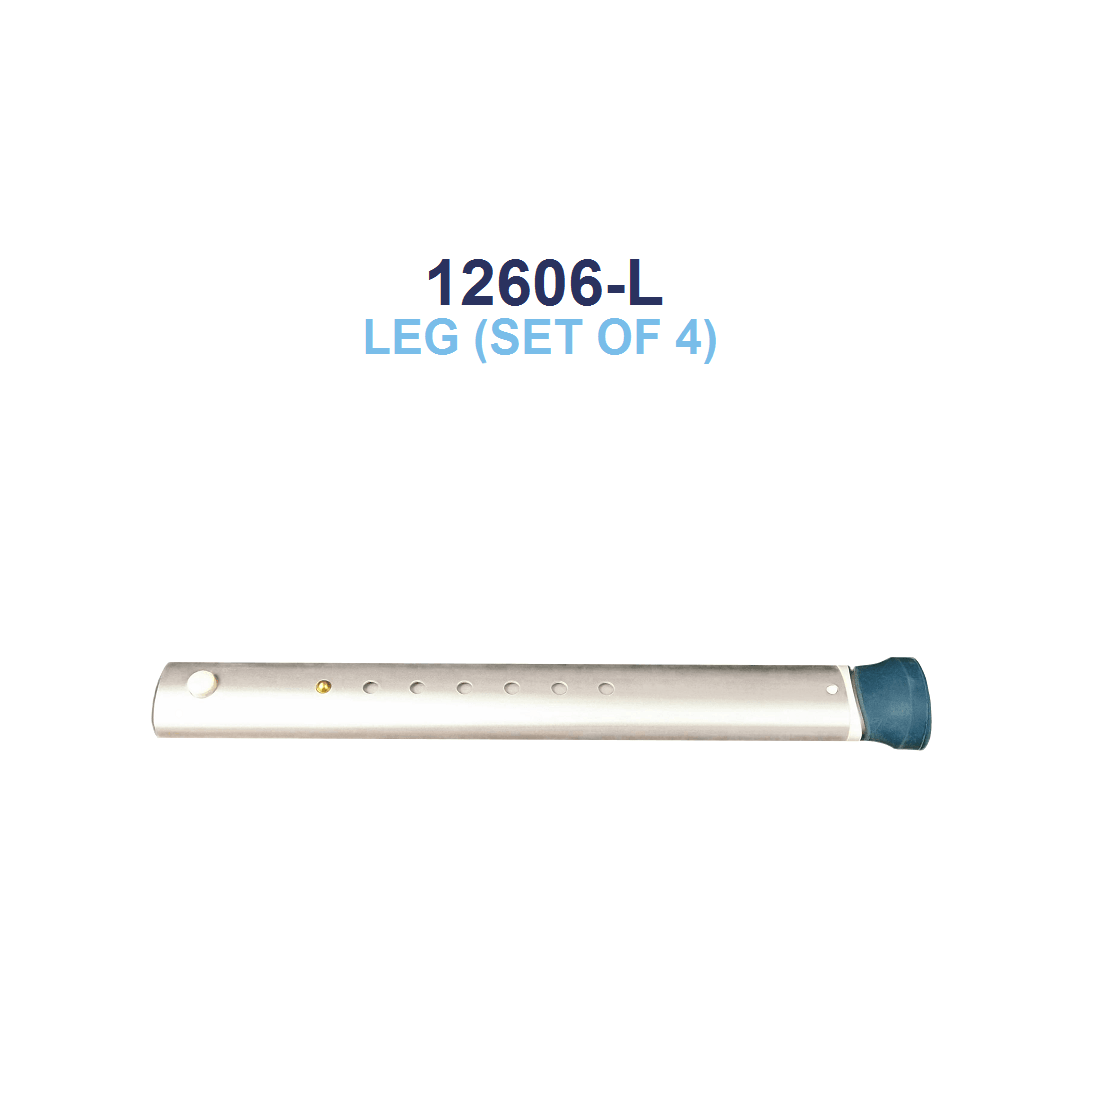 Drive Medical RTL12606 Replacement Leg Set, 12606-L, 4/set